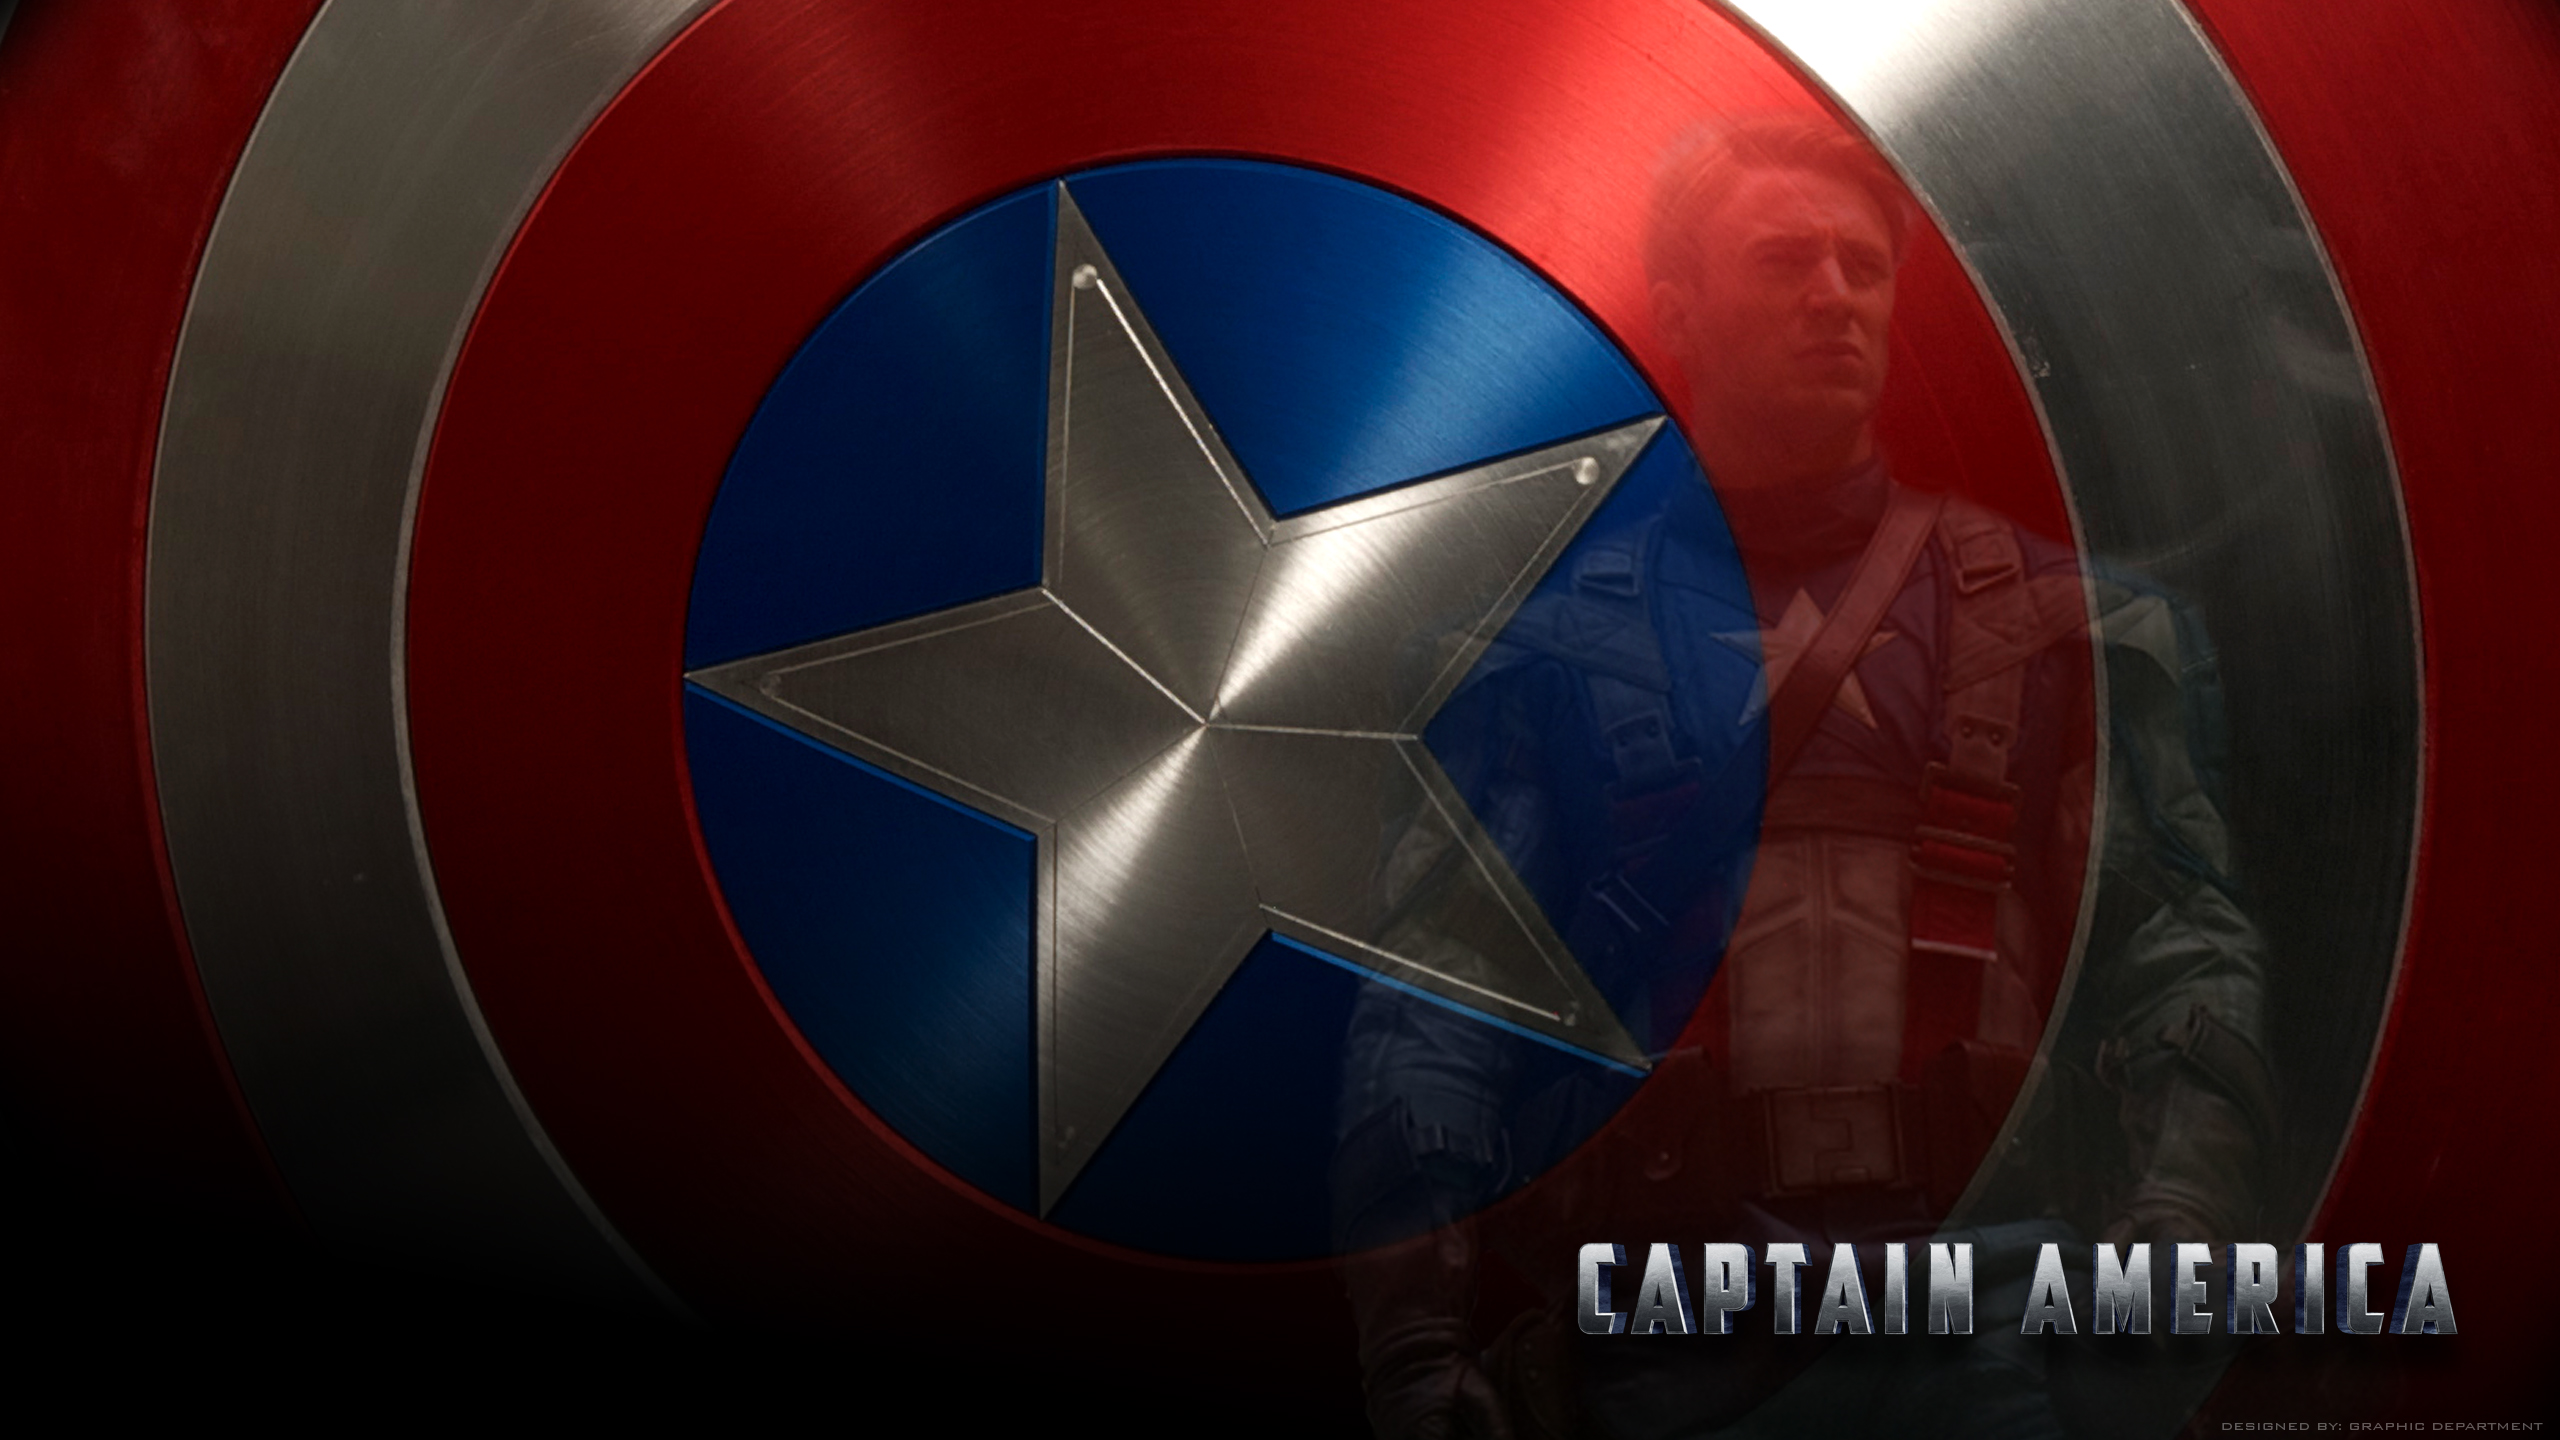 capitan america wallpaper hd,captain america,superhero,fictional character,logo,avengers